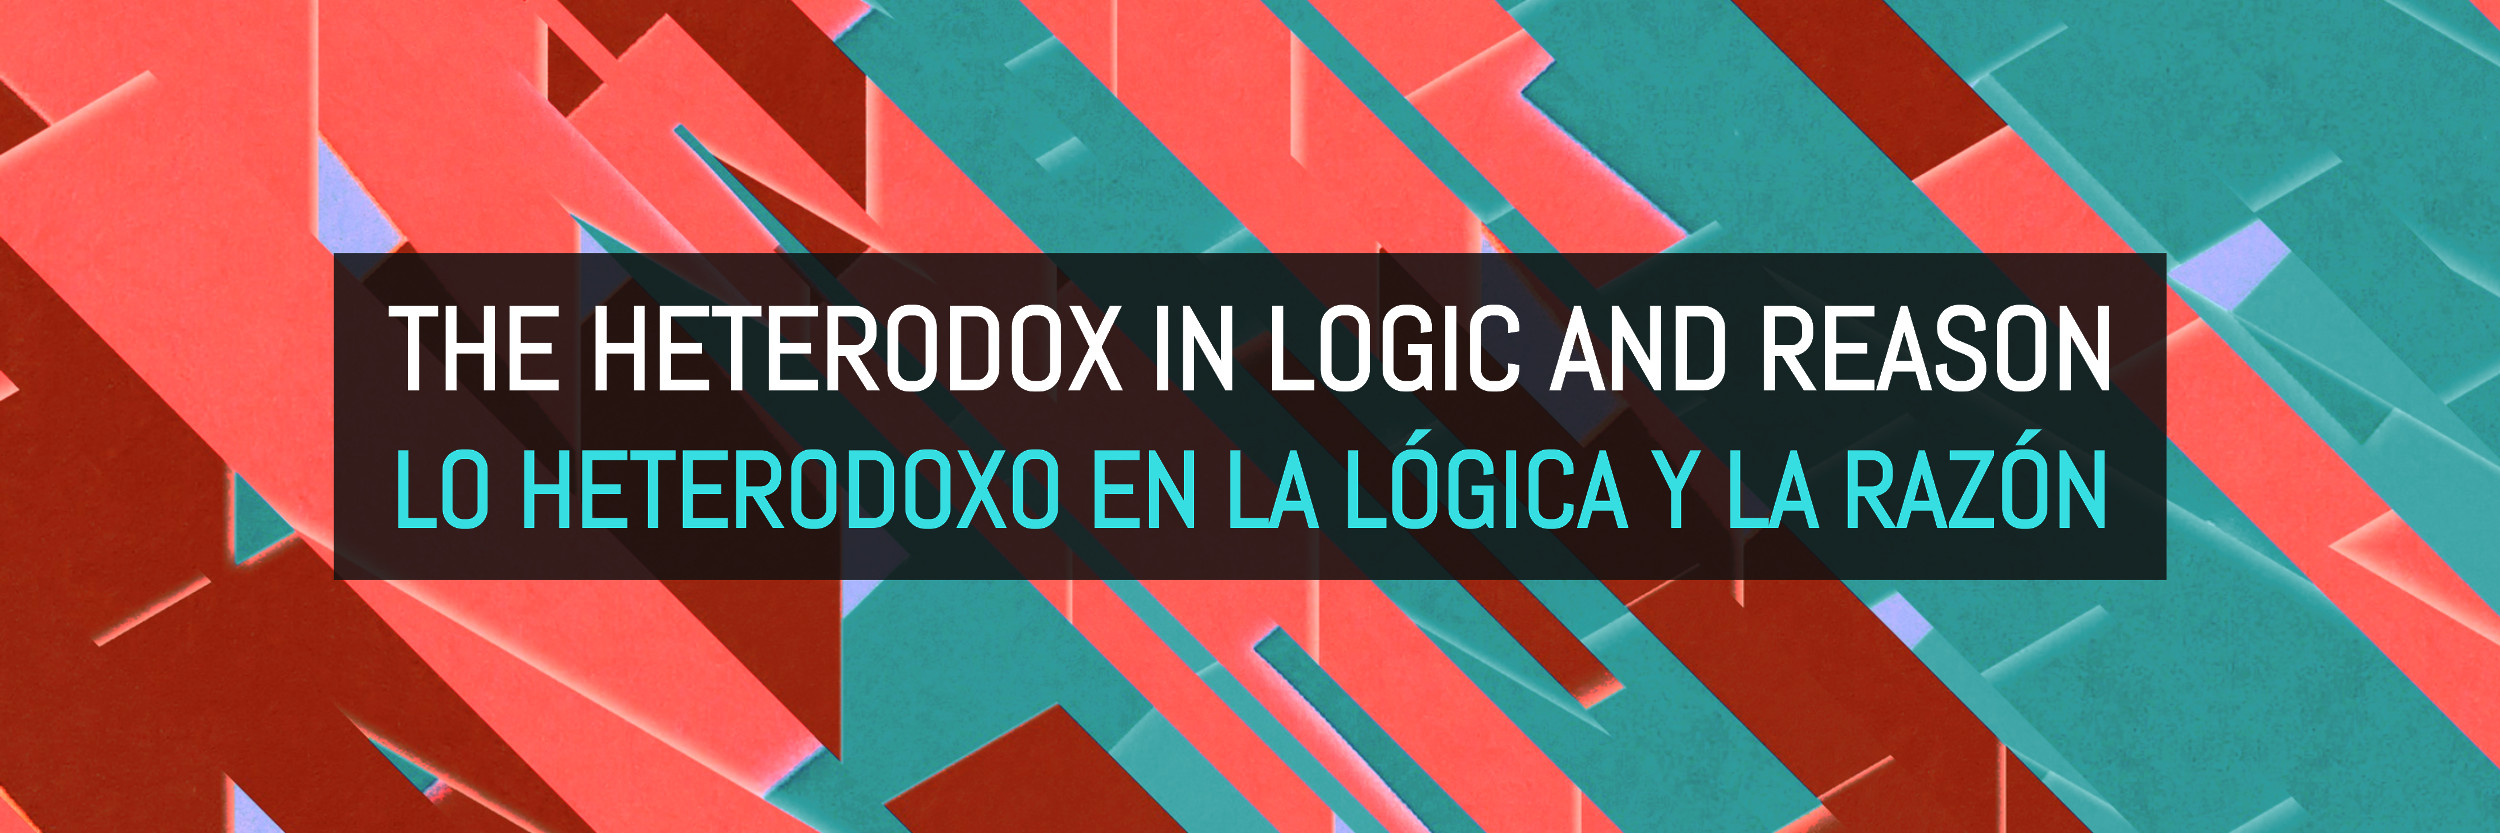 Call: The Heterodox in Logic and Reason